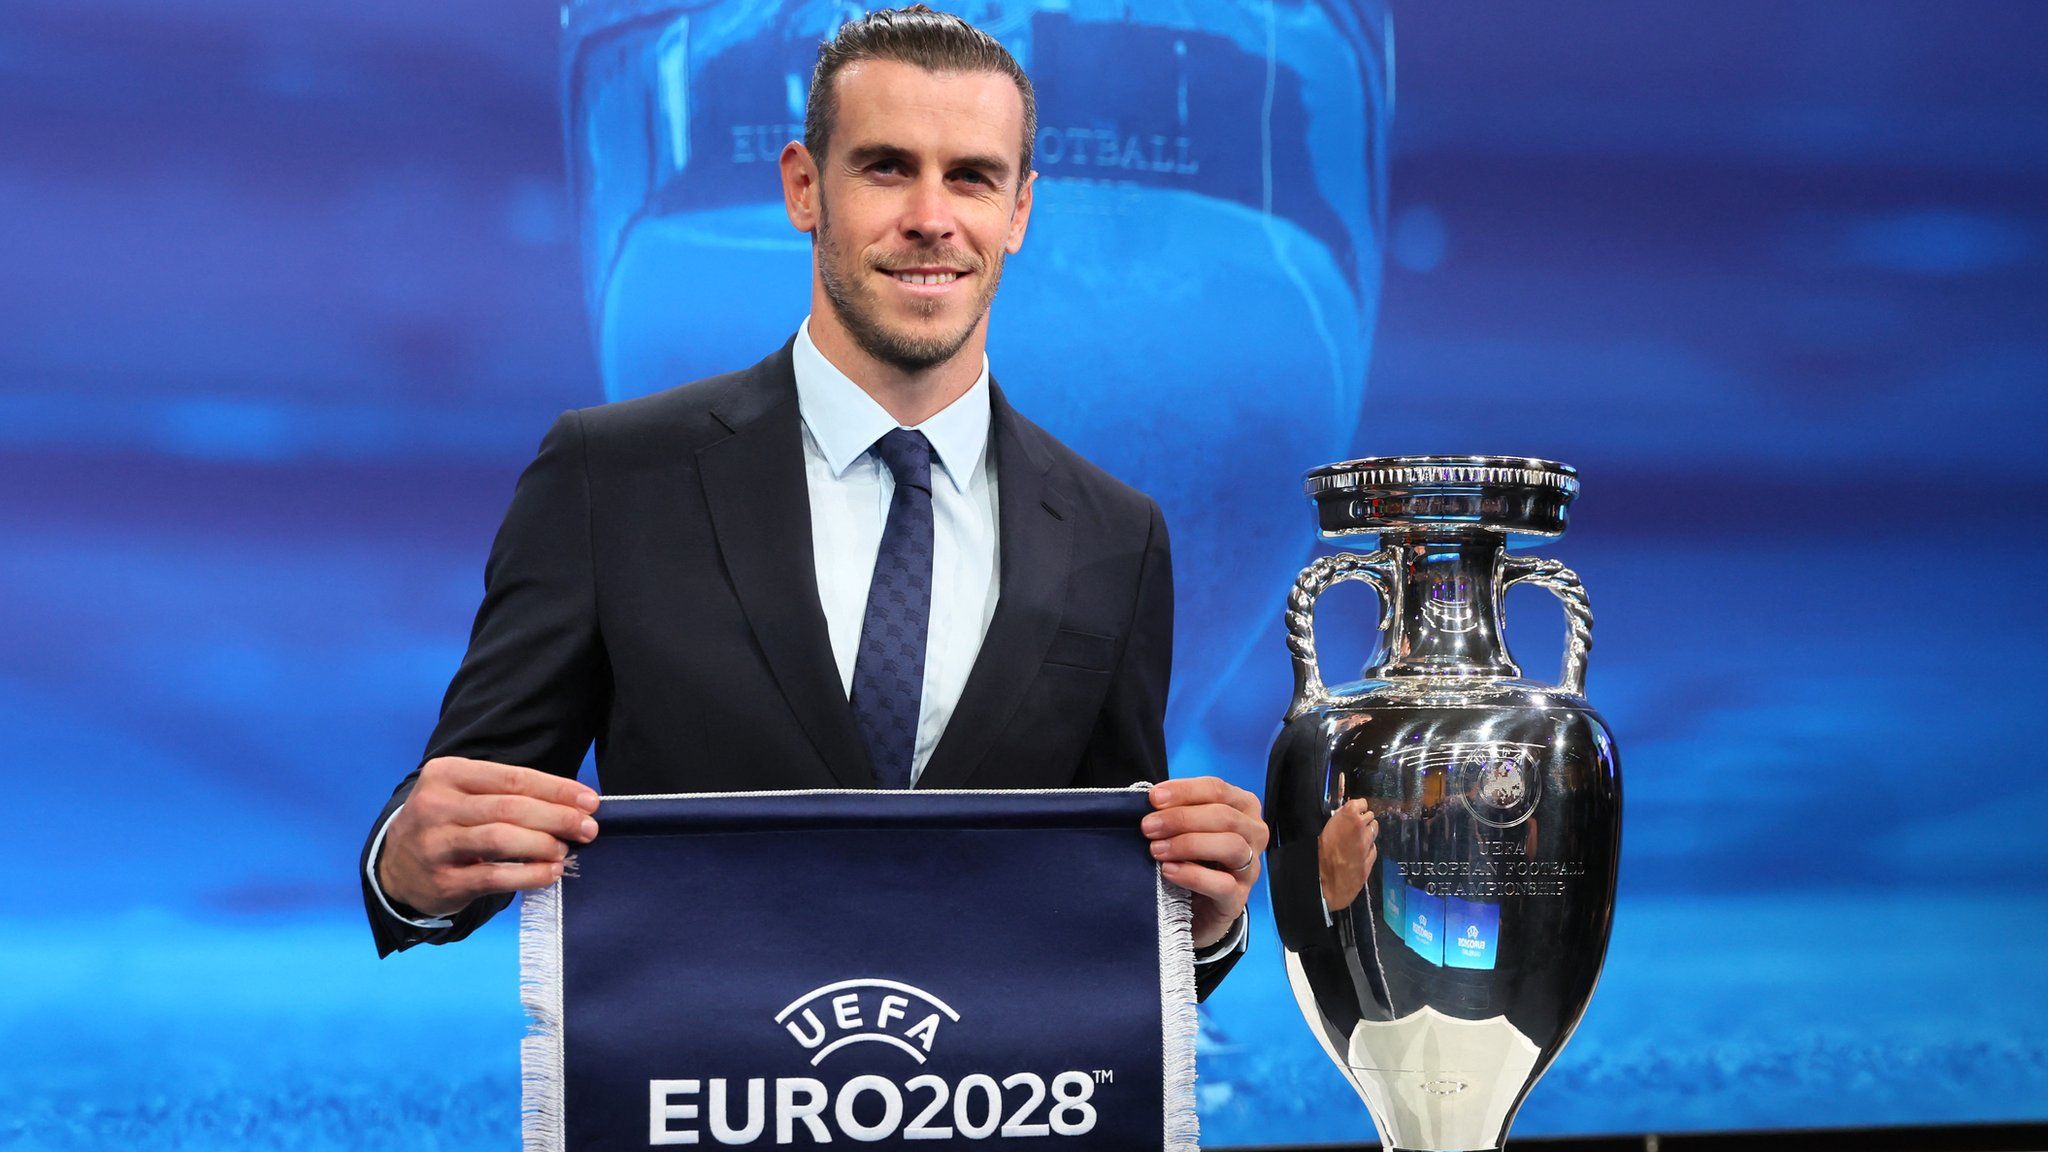 Gareth Bale at Euro 2028 presentation